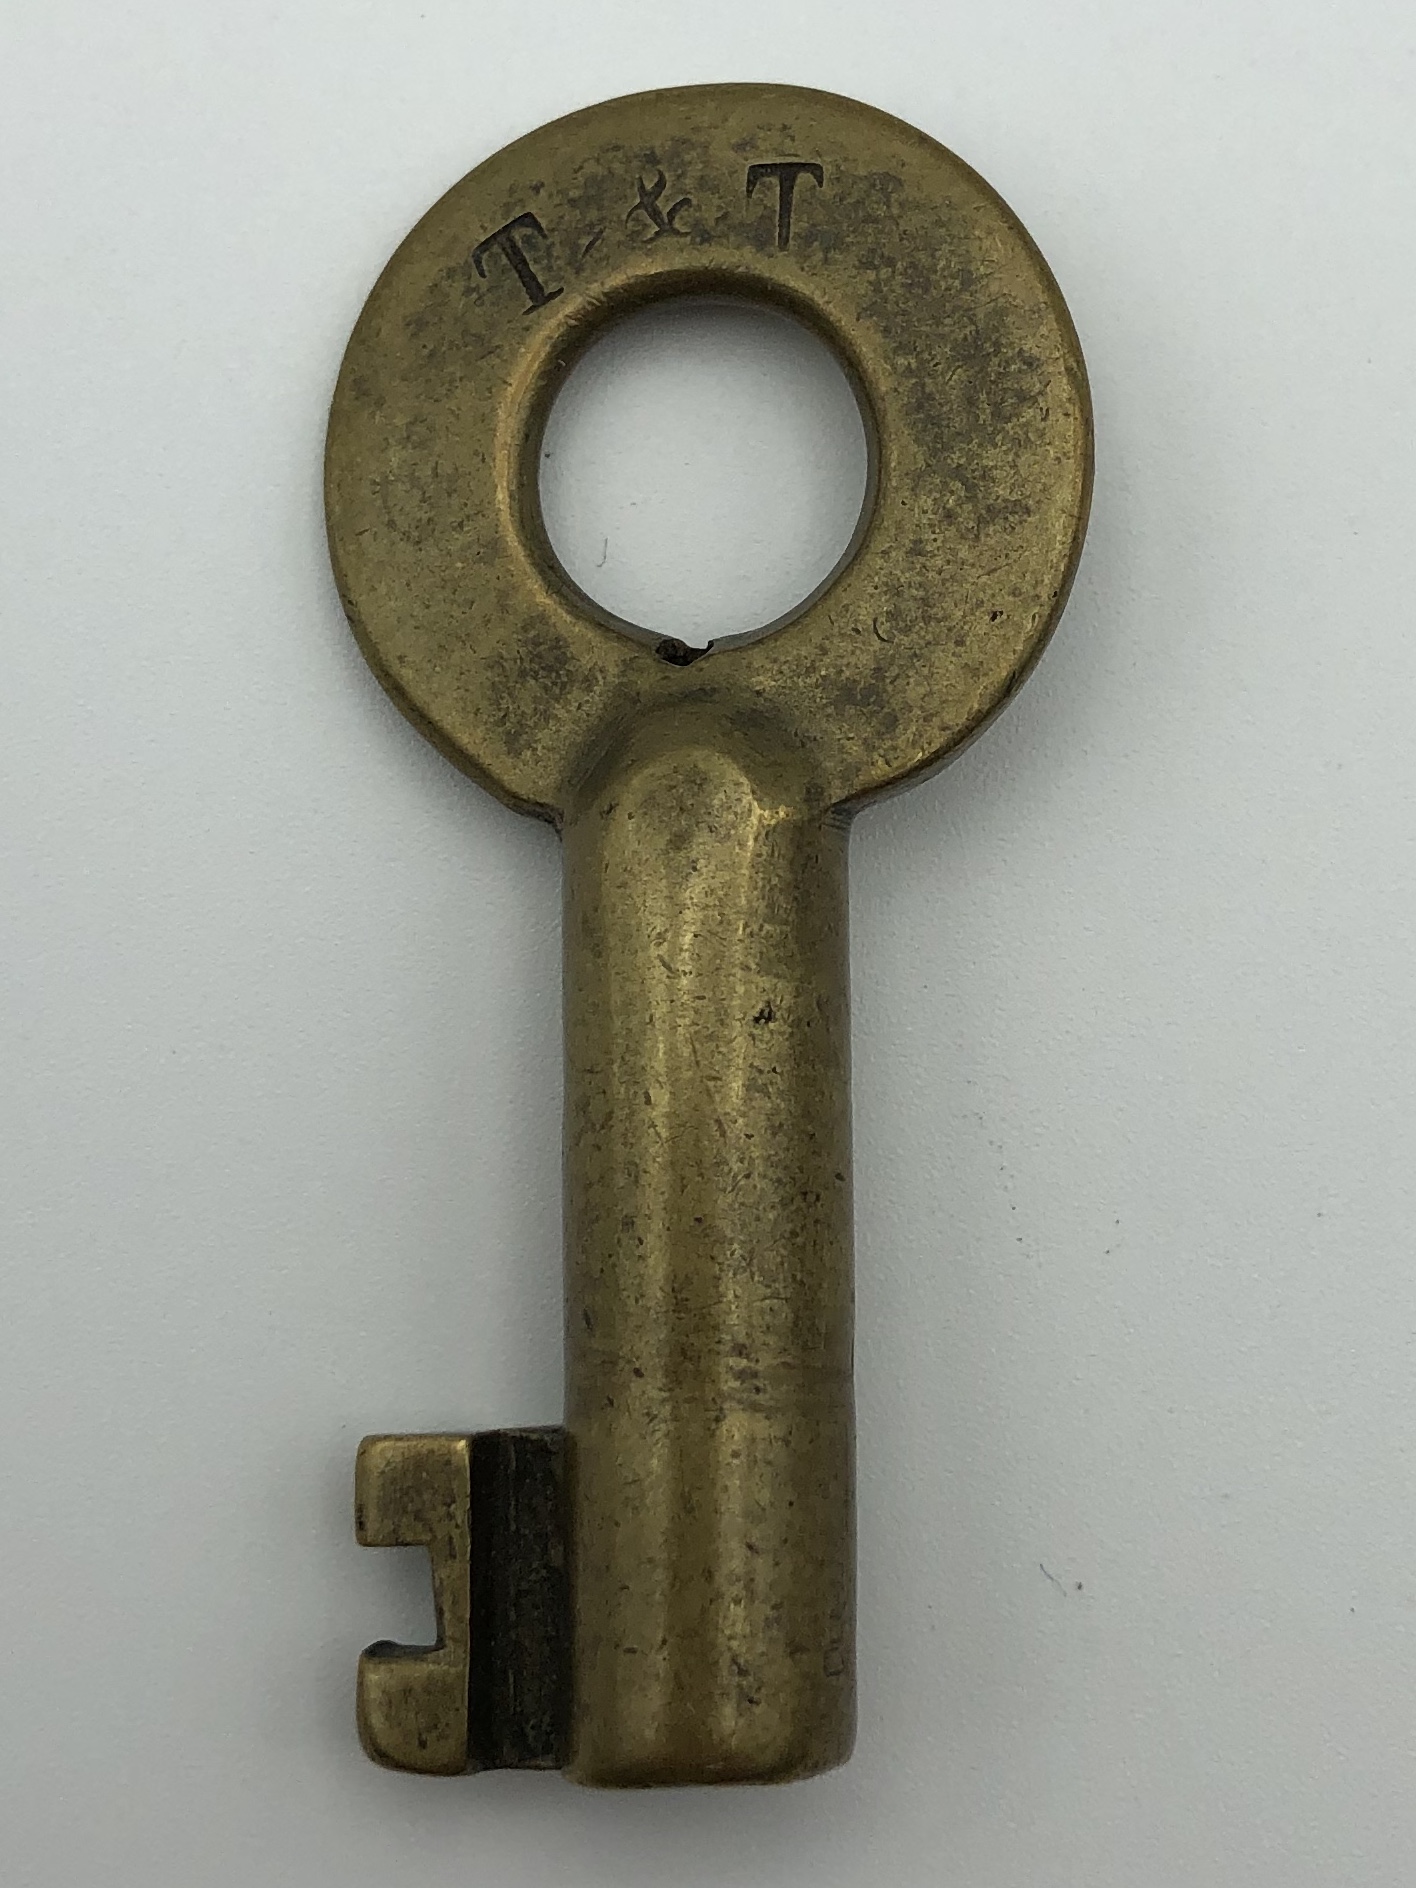 tonopah & tidewater railroad switch key-railroad antiques for sale-railroadiana